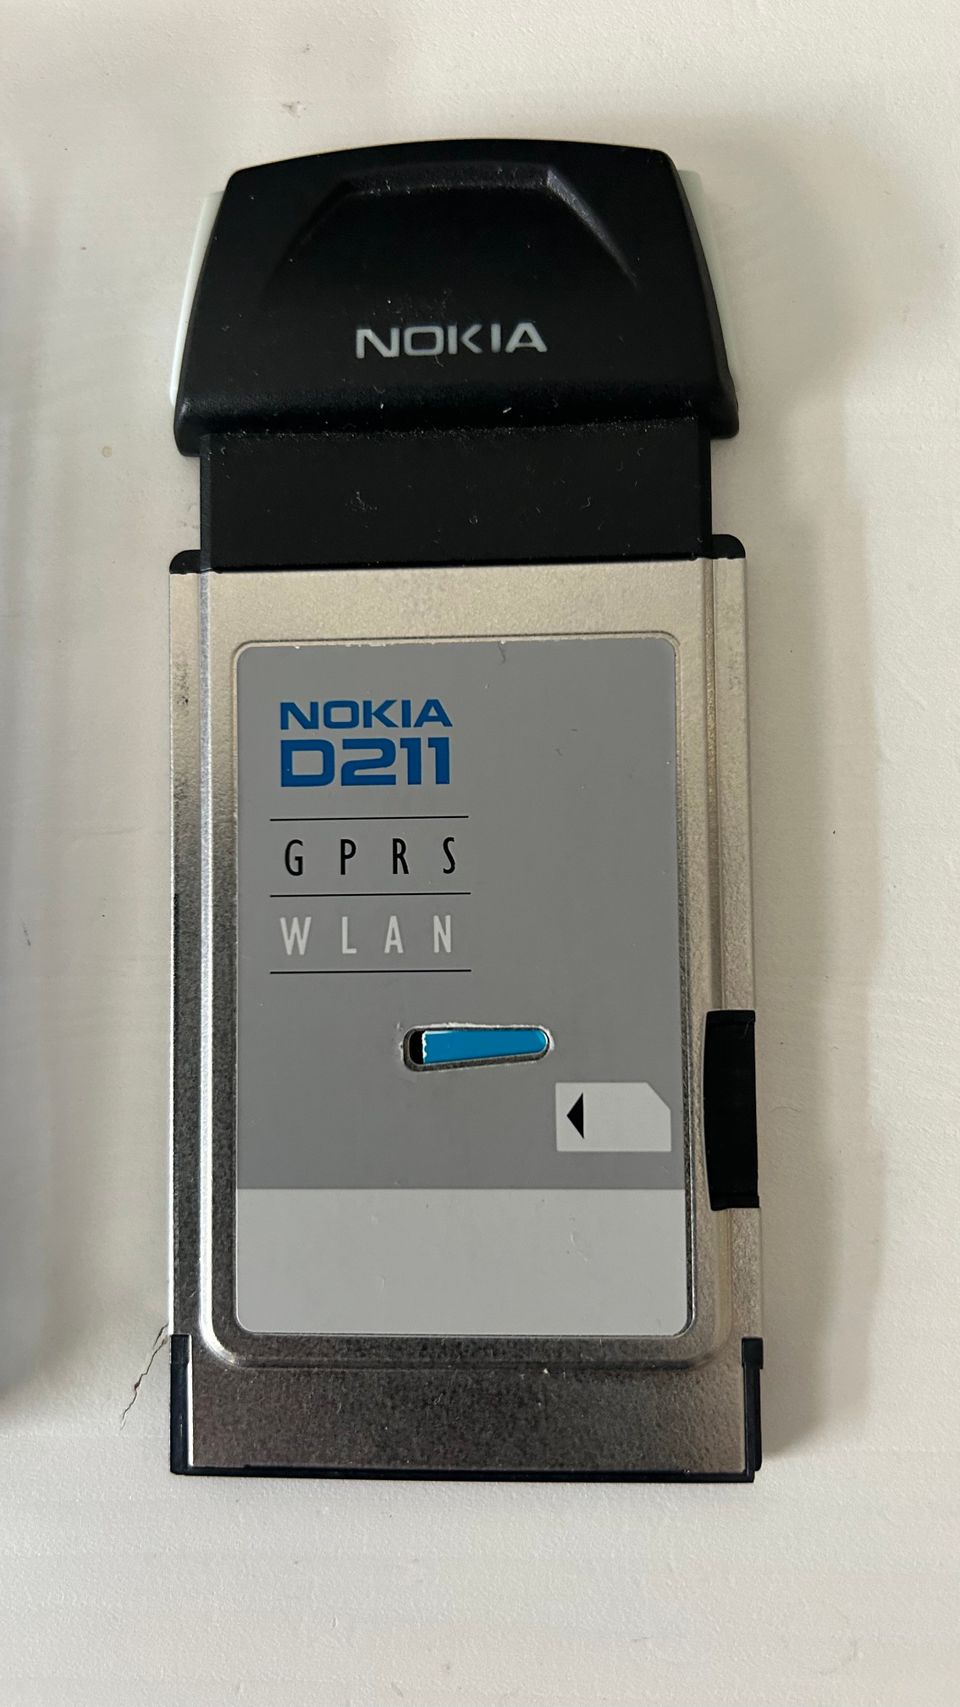 Nokia D211 gprs/Wlan